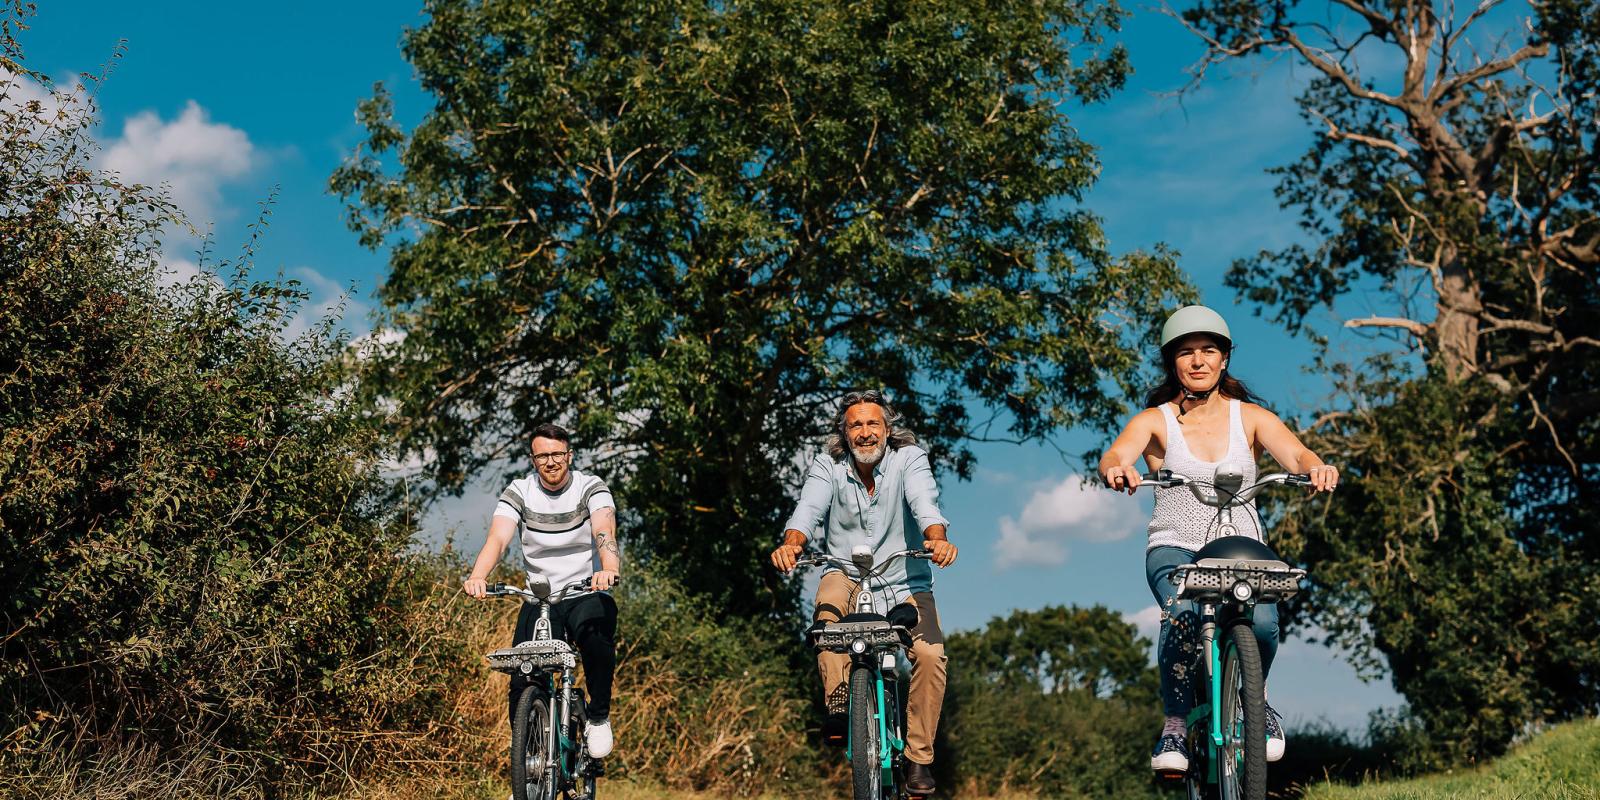 Riders enjoying the bike share scheme in Hereford